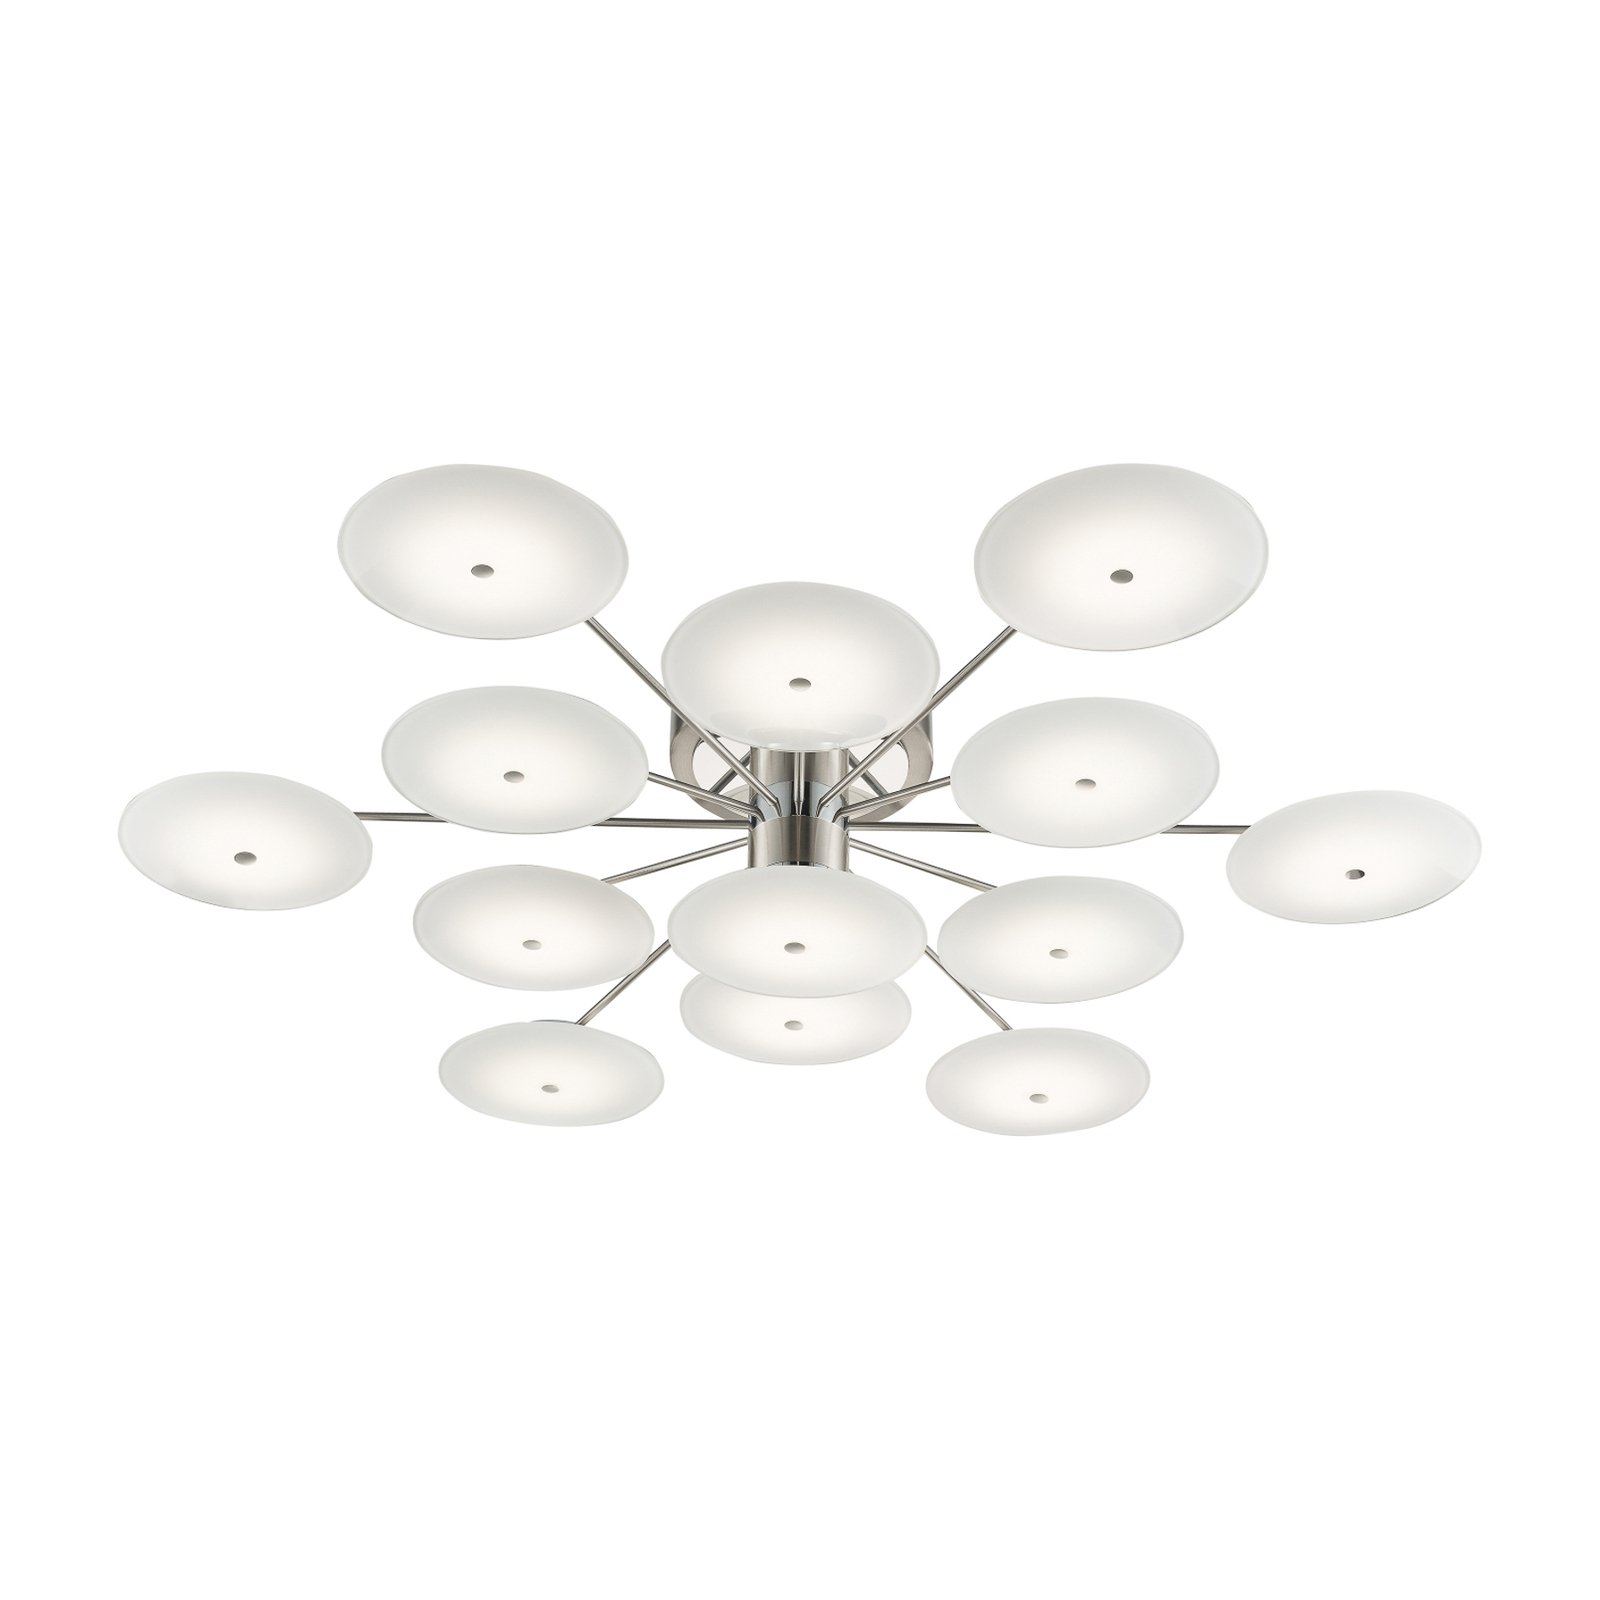 B+M LEUCHTEN Astra ceiling lamp, 13-light, nickel